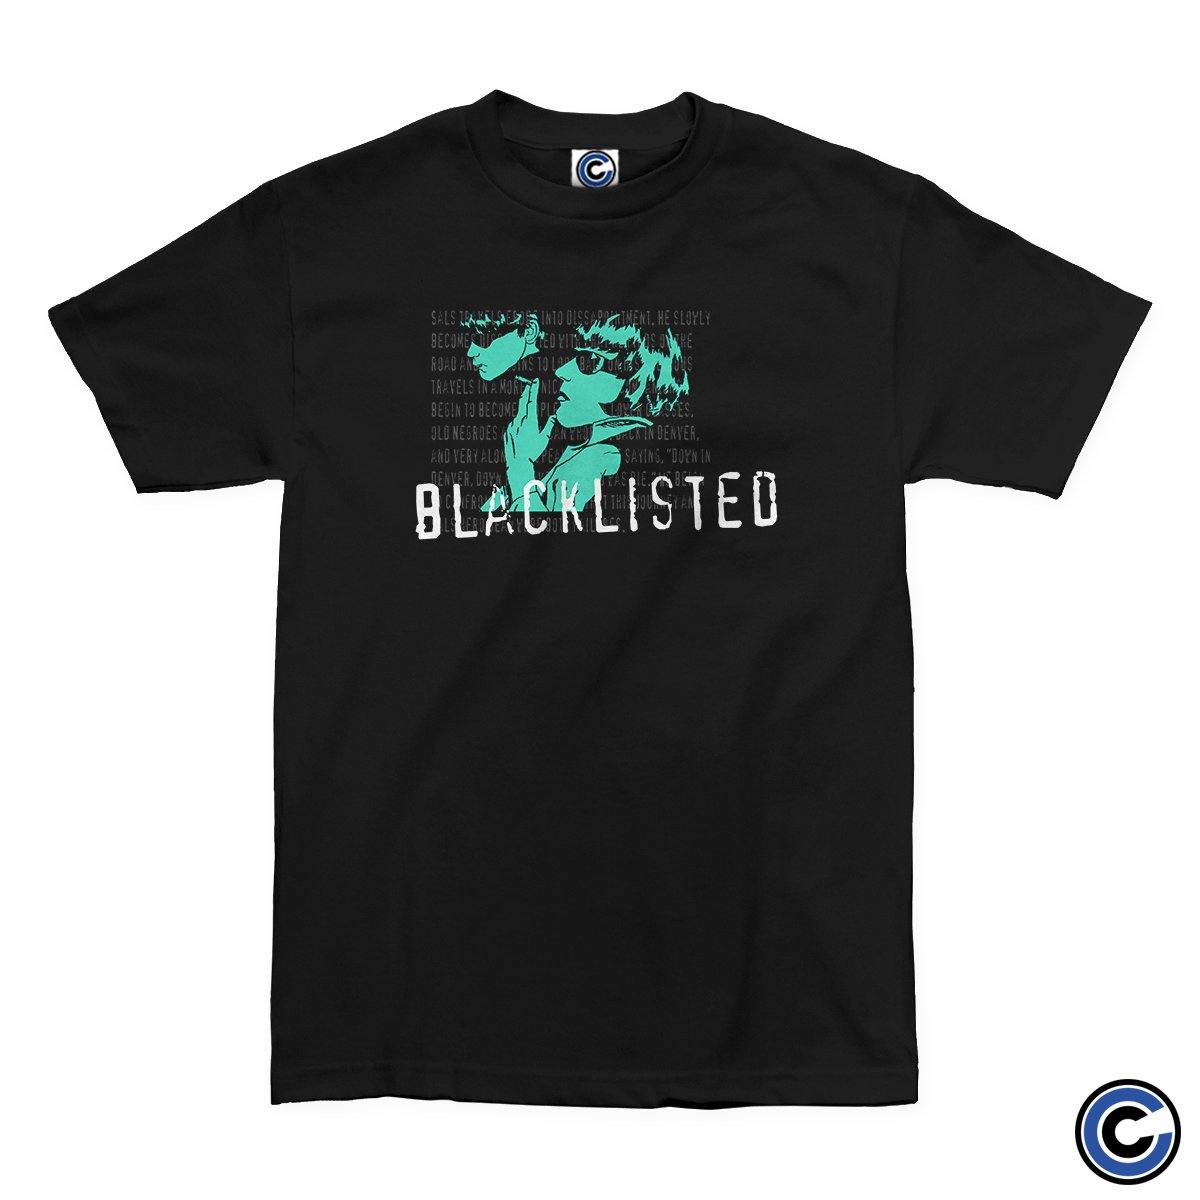 Buy – Blacklisted "Smoking" Shirt – Band & Music Merch – Cold Cuts Merch